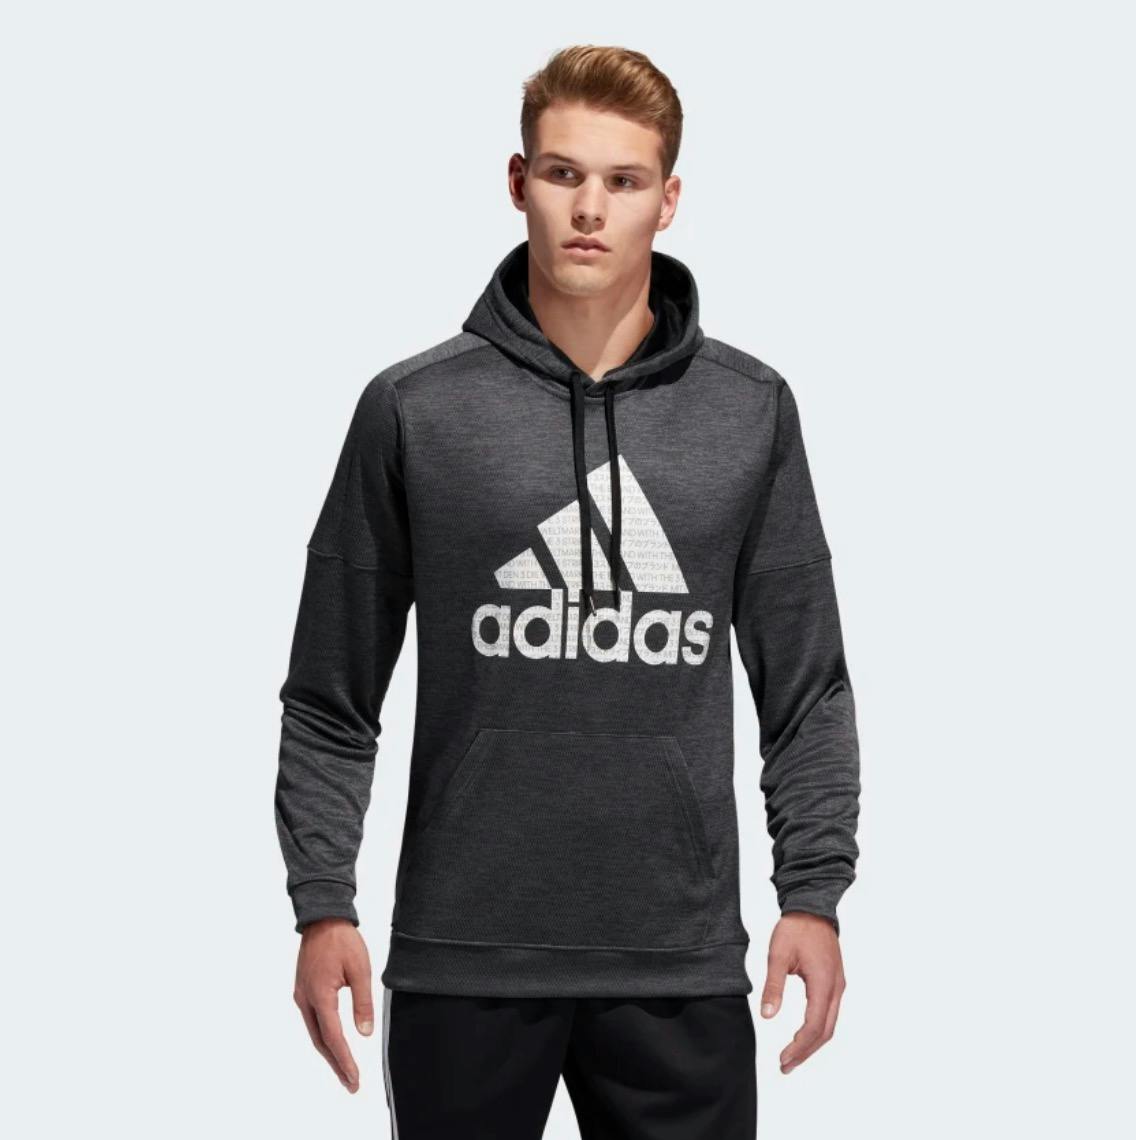 exclusive adidas hoodies